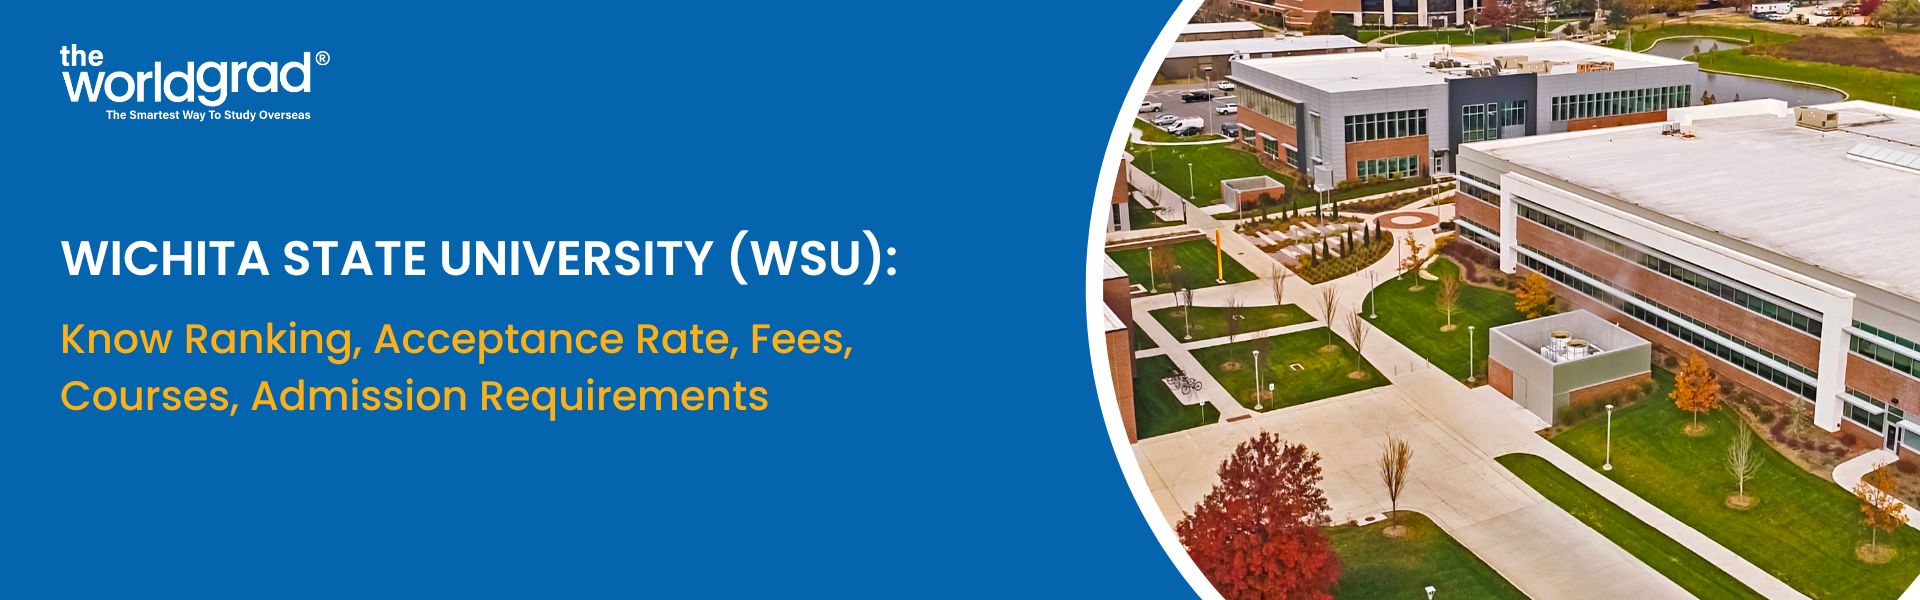 Wichita State University Admission Requirements